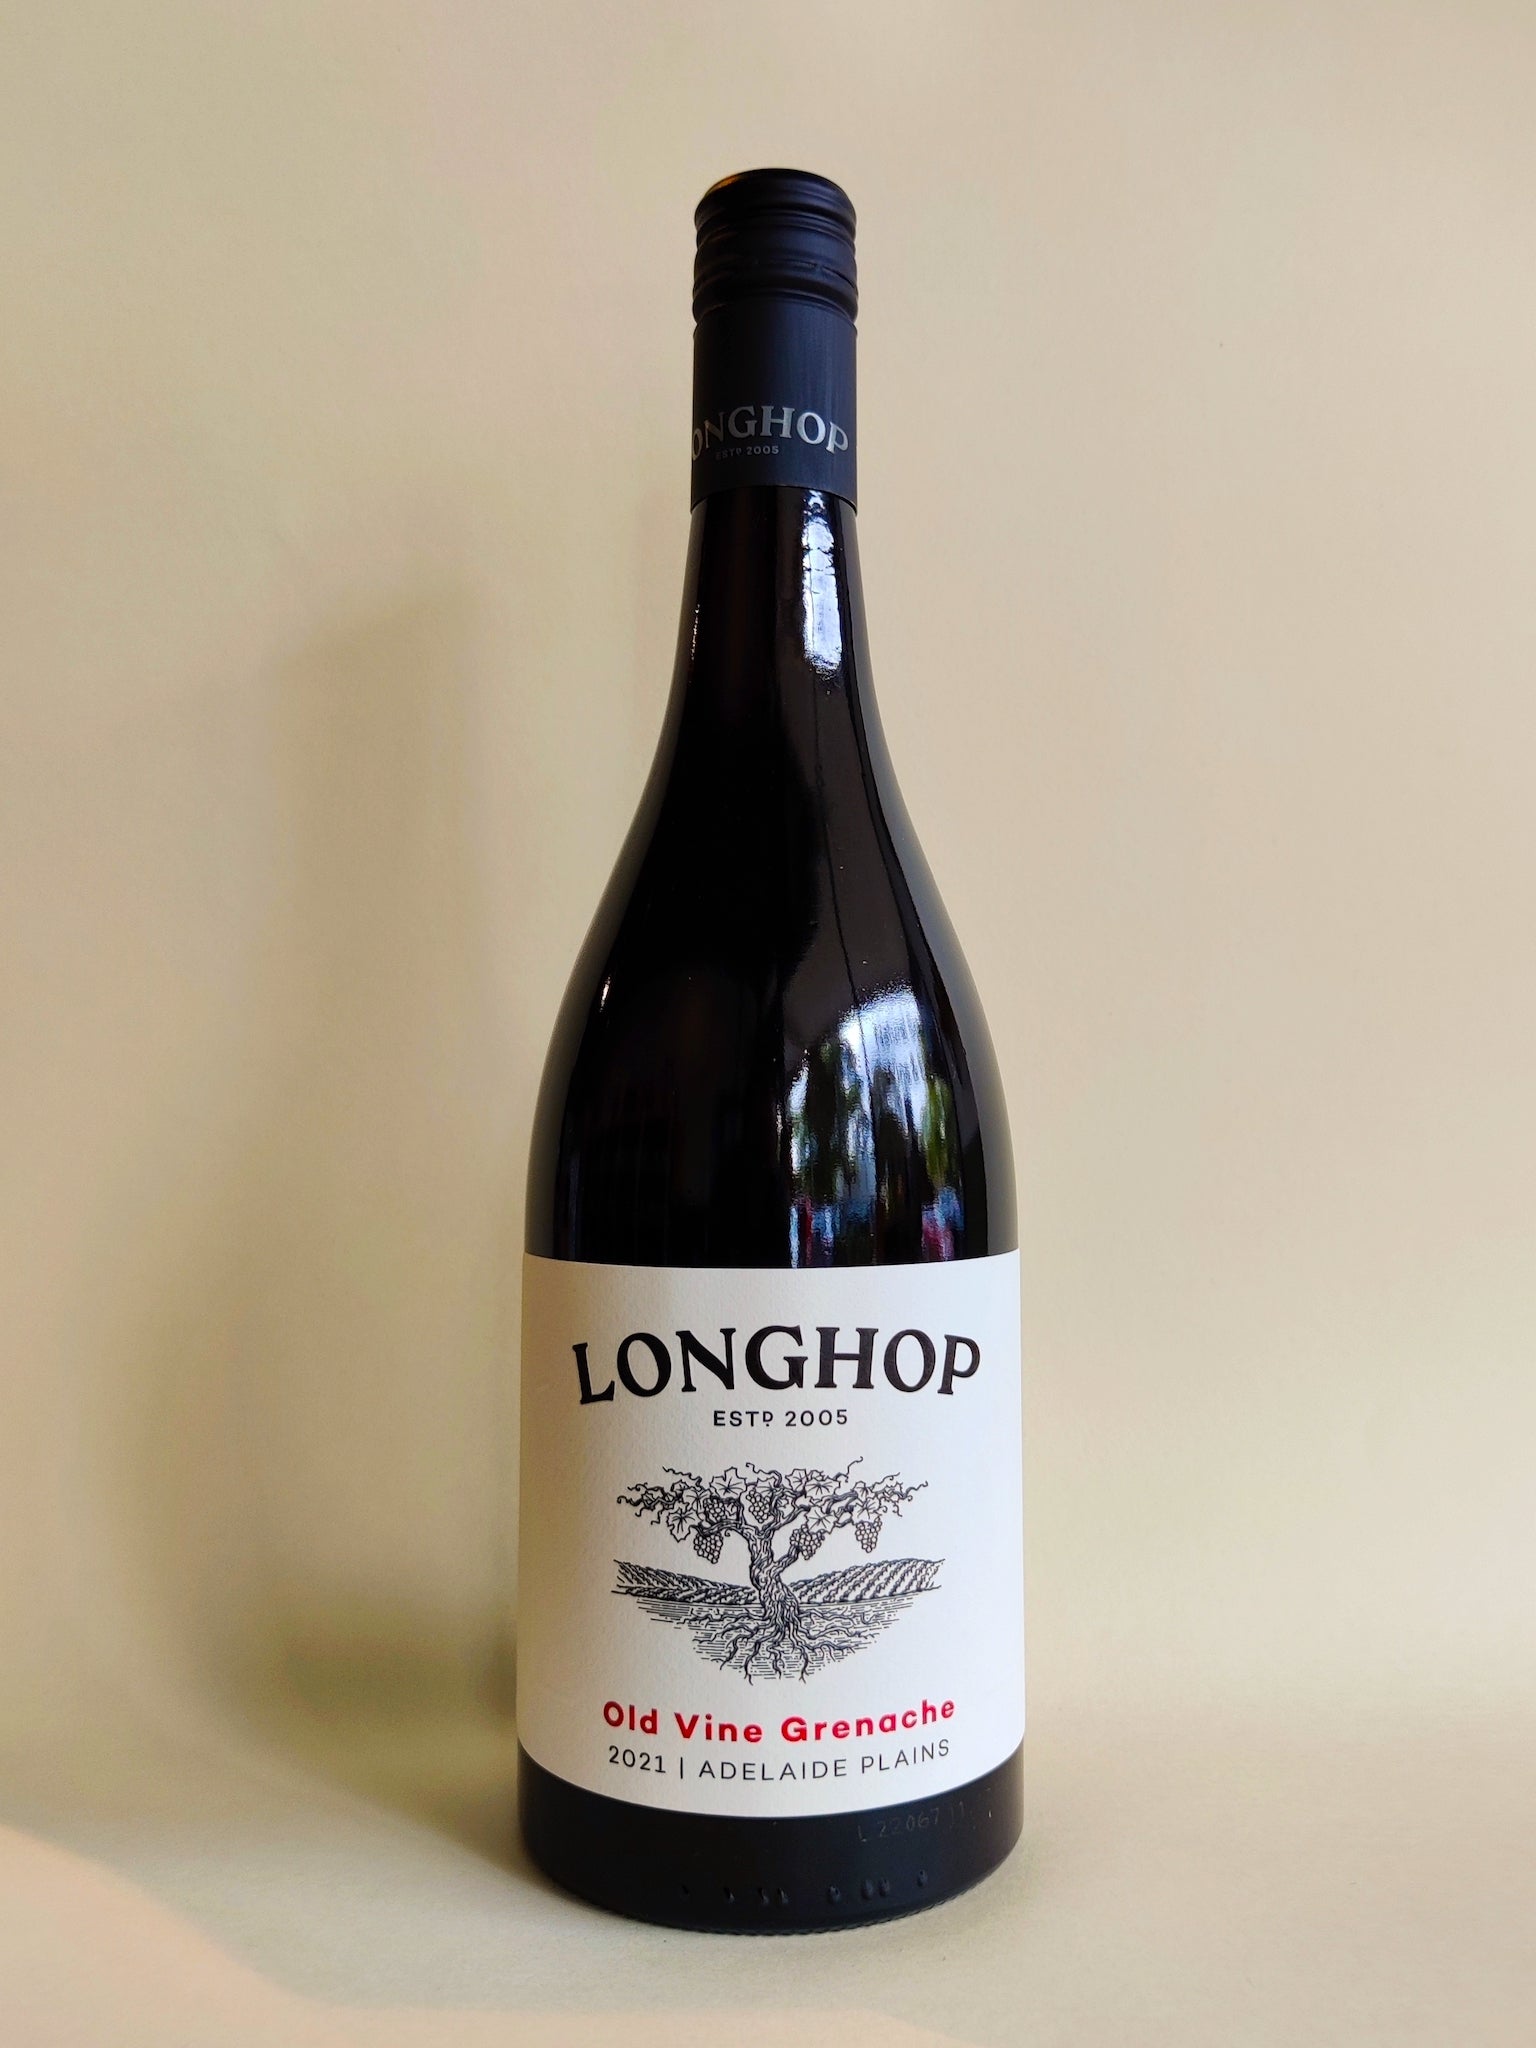 A bottle of Longhop Old Vine Grenache from Adelaide Plains, South Australia.